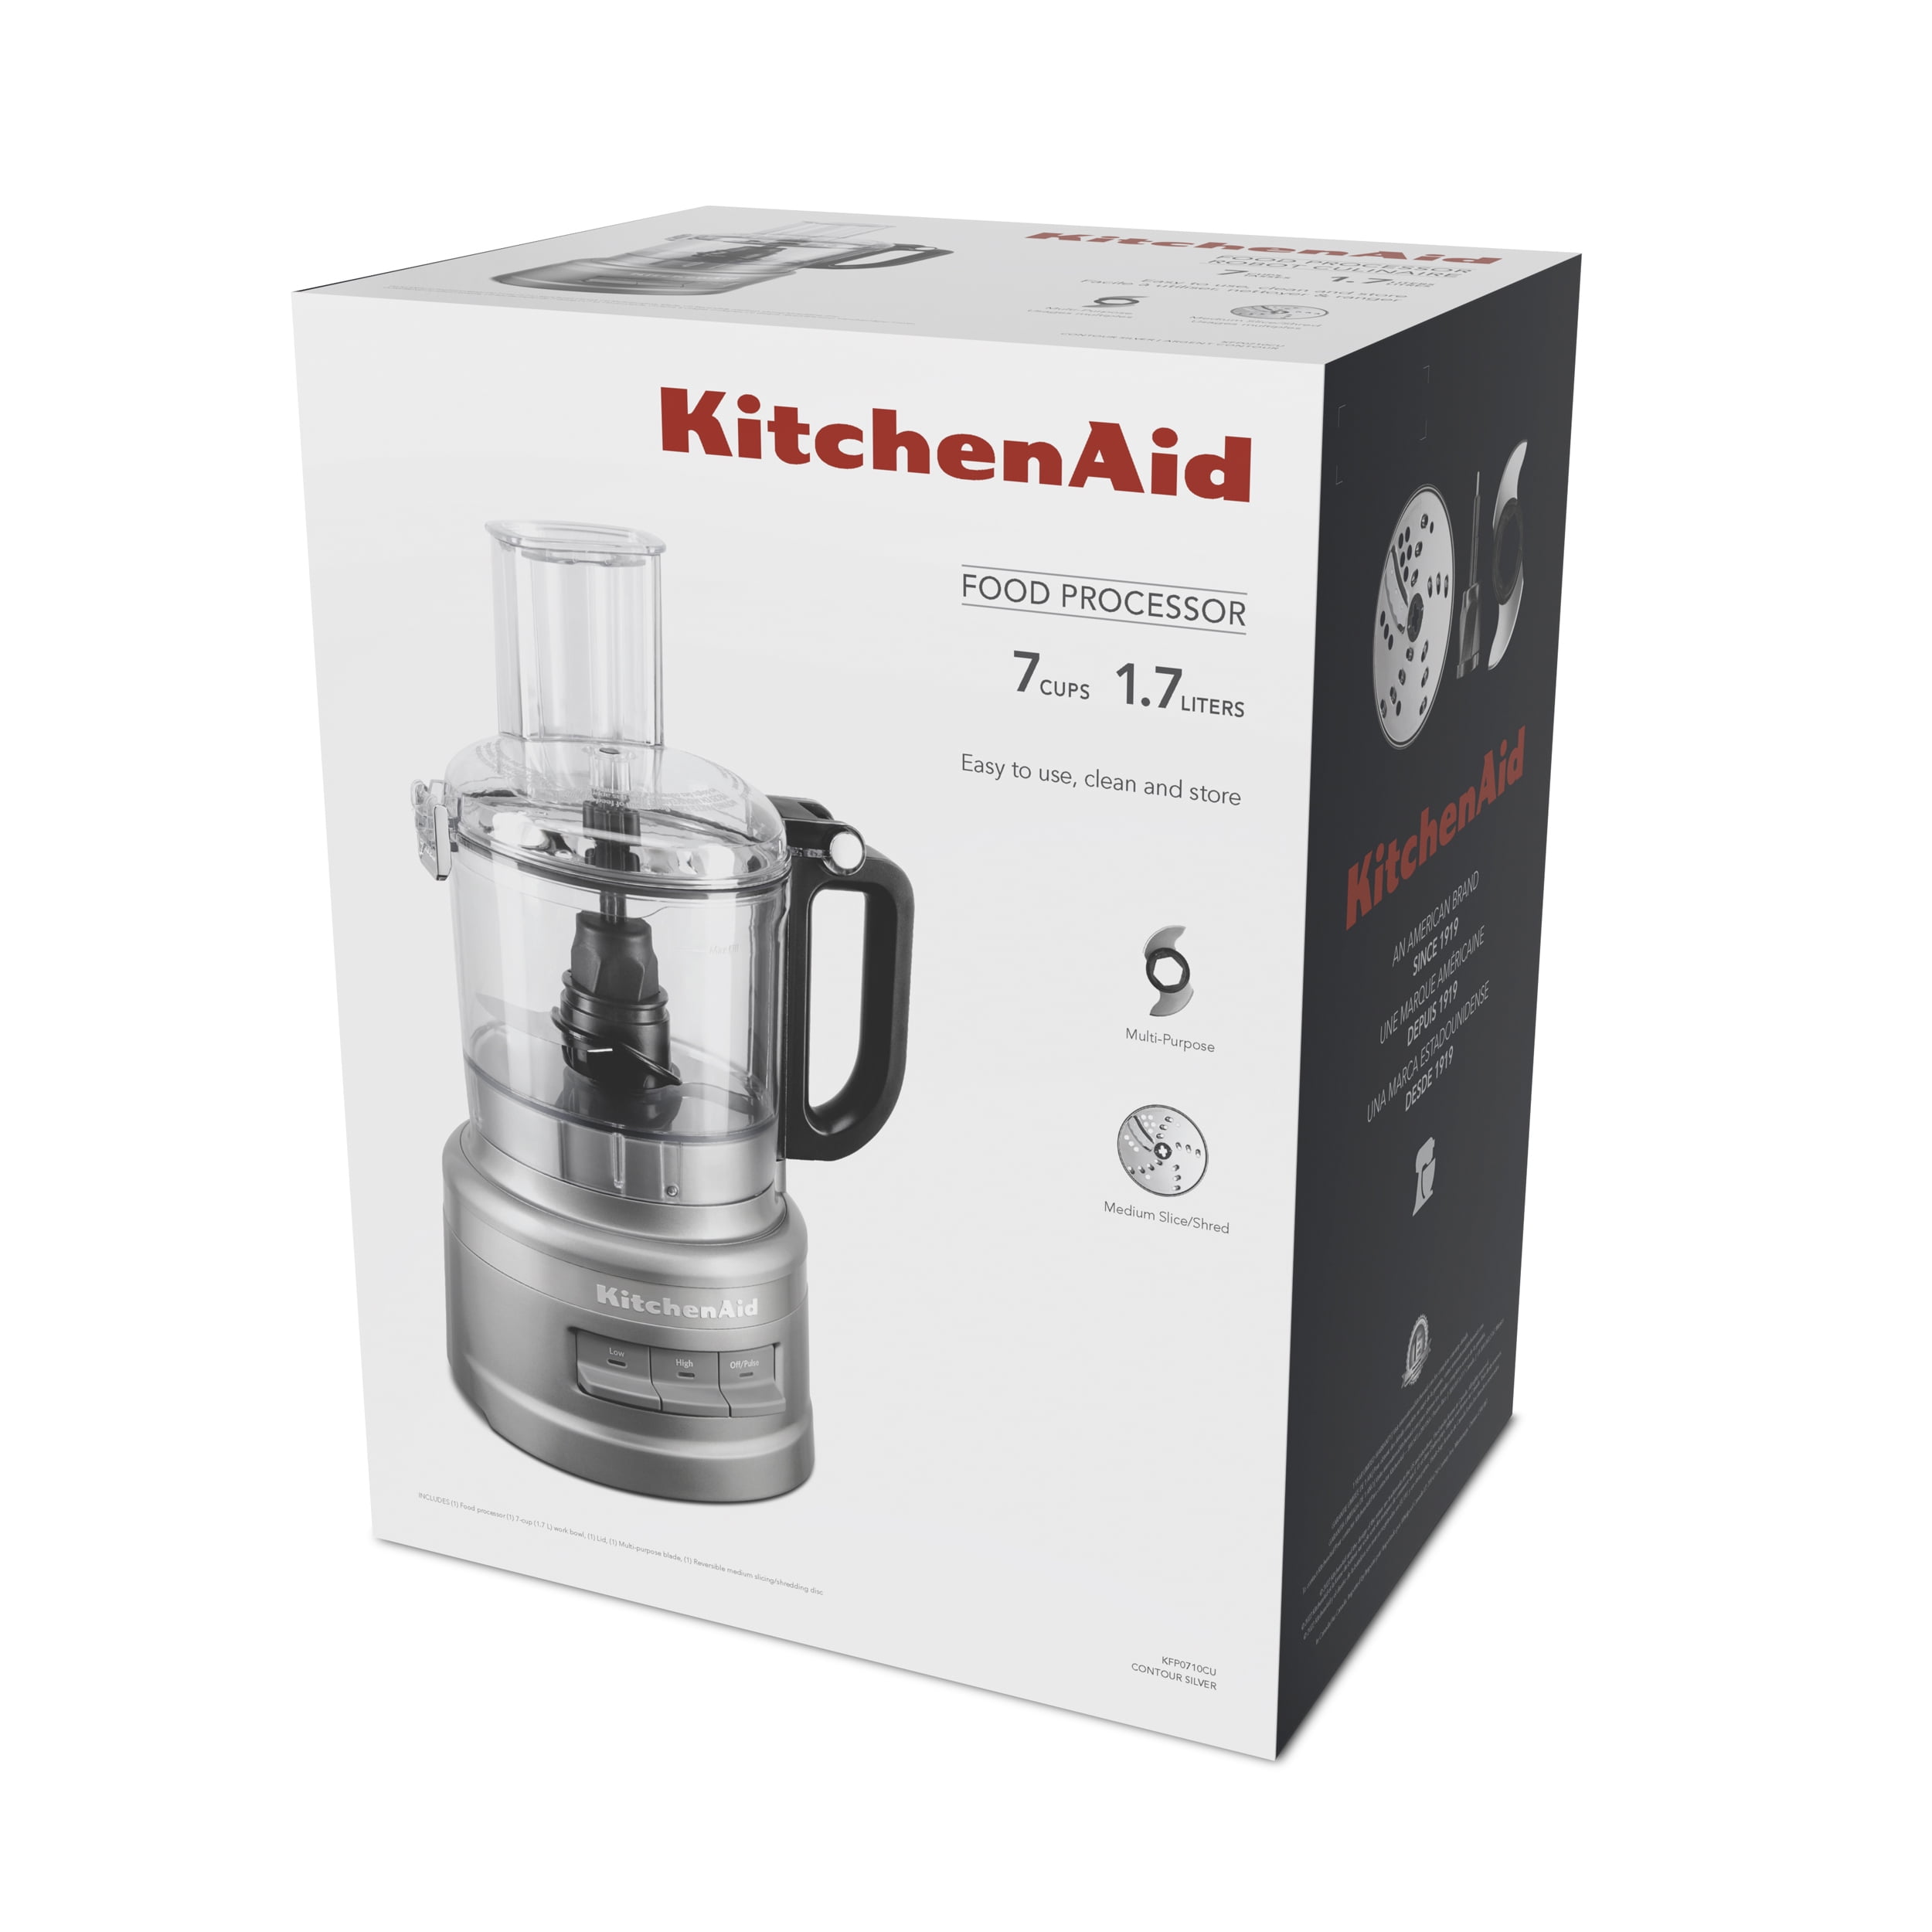 KitchenAid KFP0711cu 7-Cup Food Processor Review • Food Processor